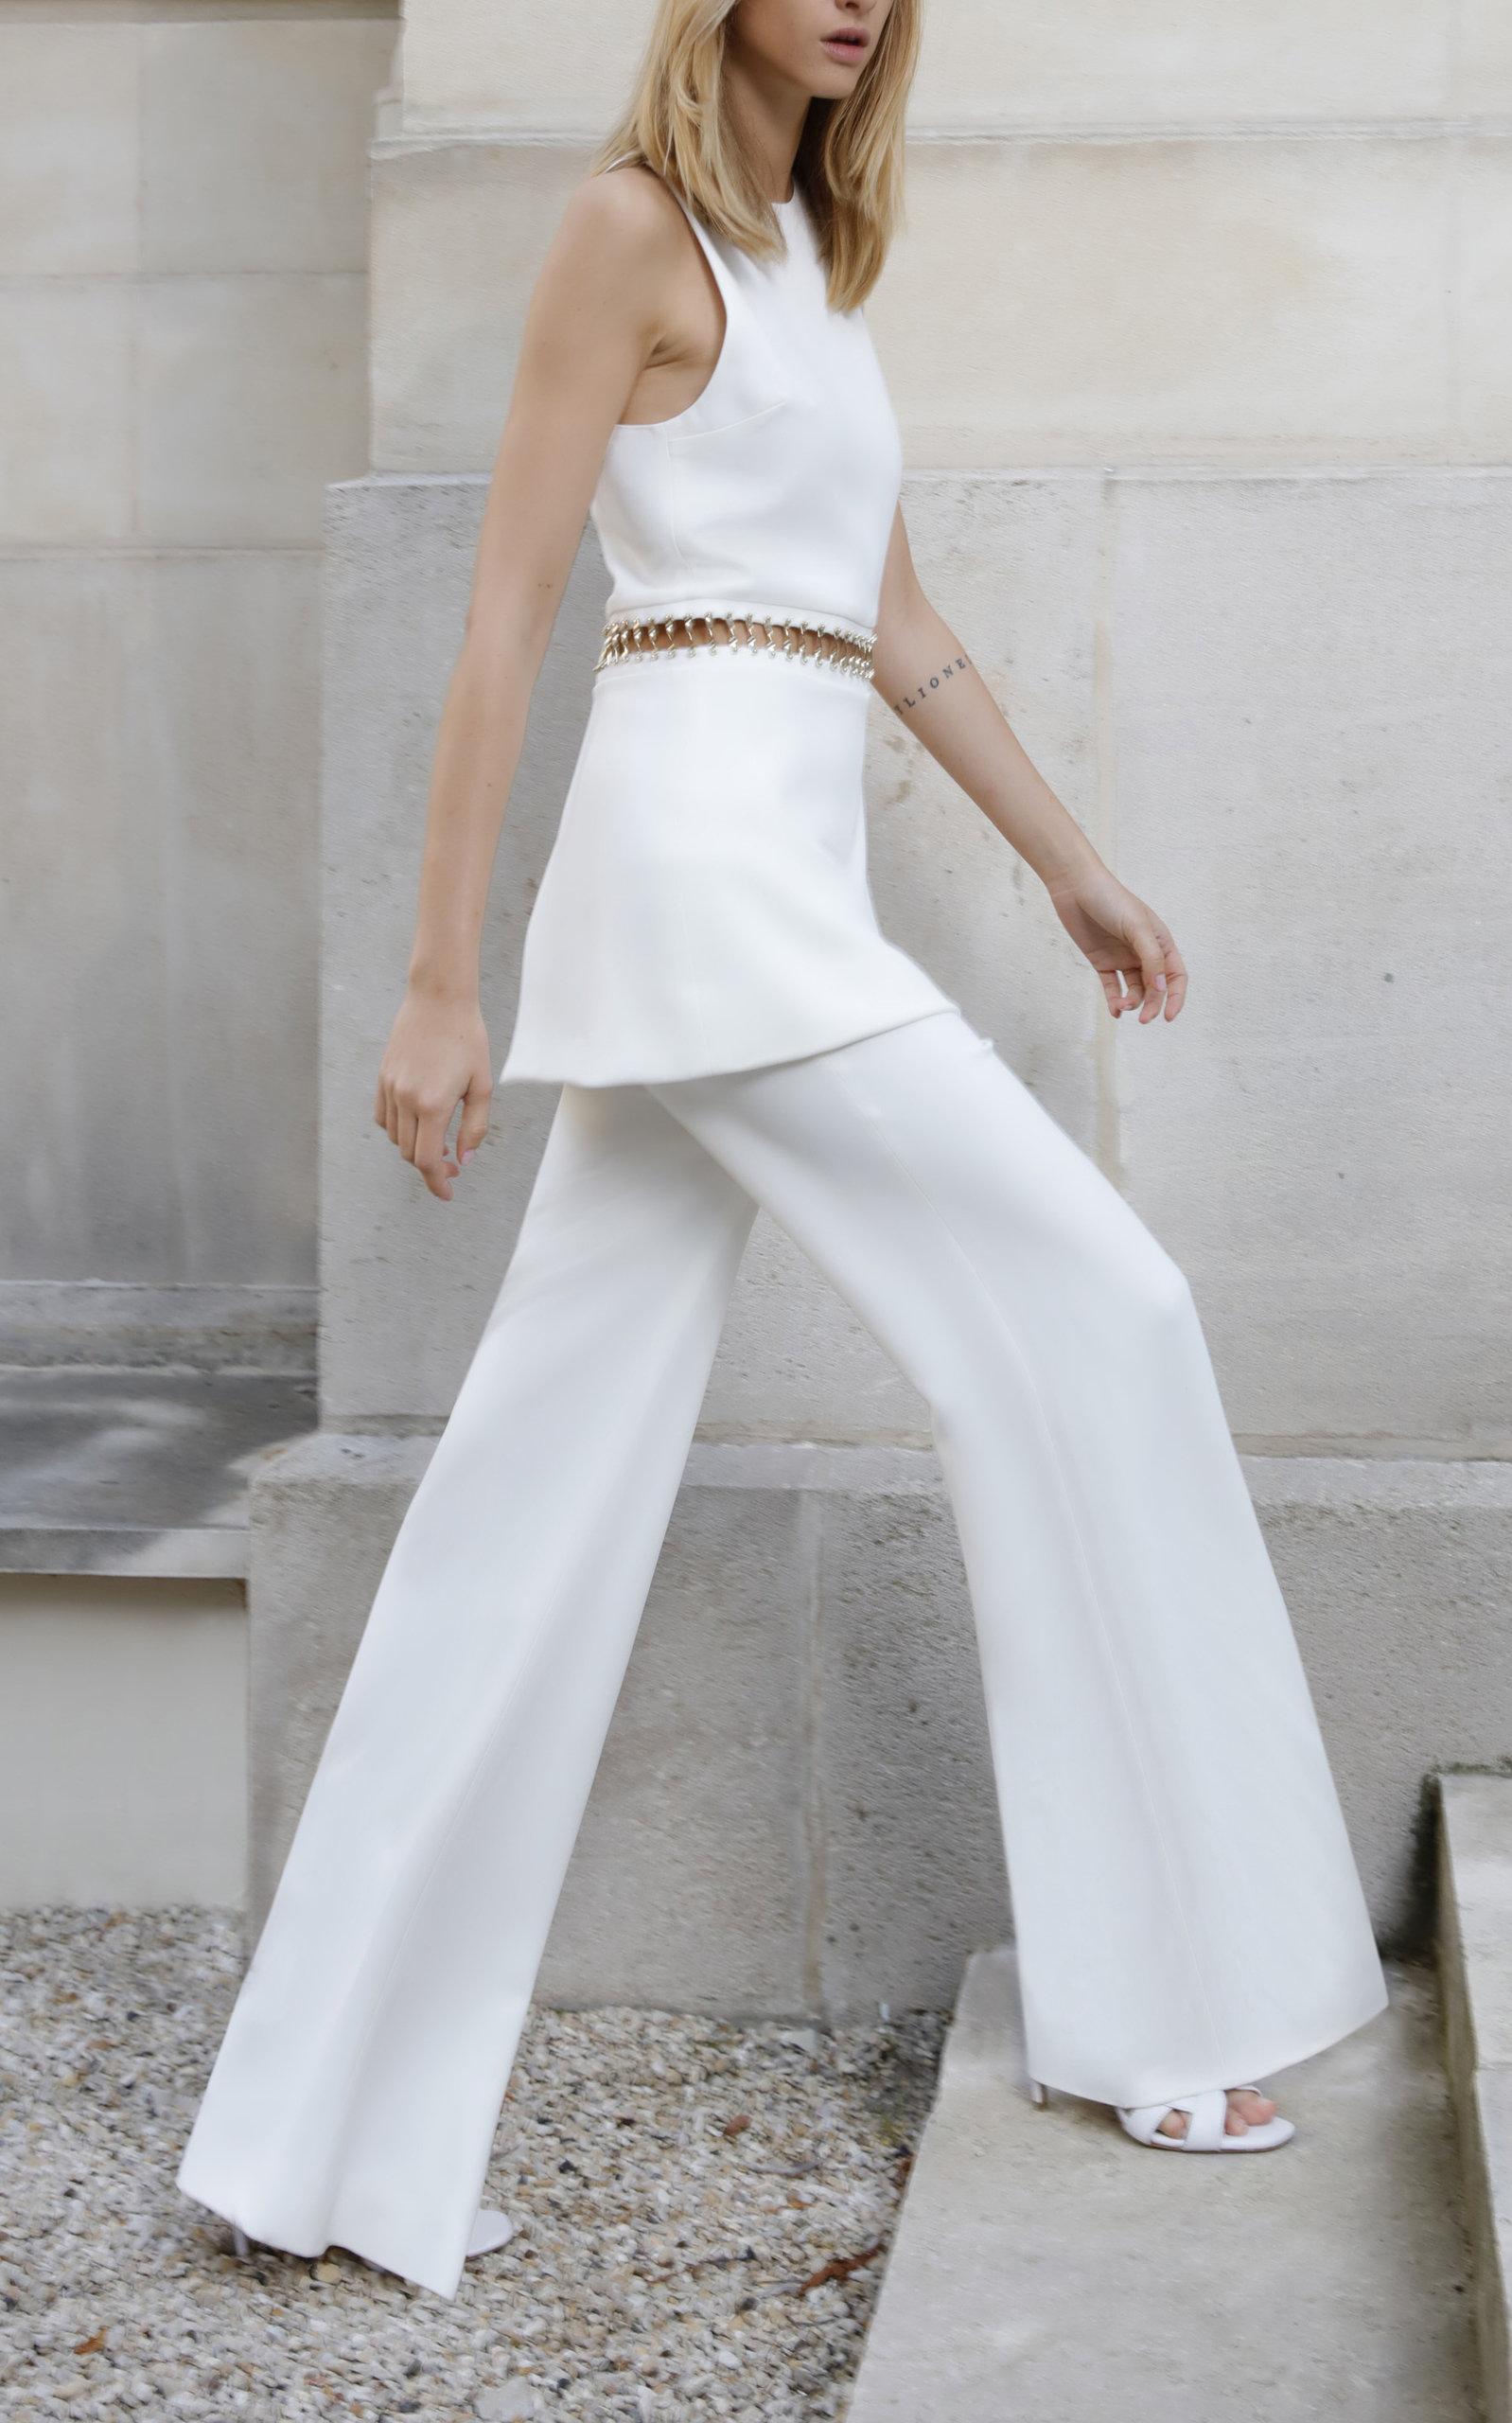 Elie Saab Embellished Cady Jumpsuit in White | Lyst